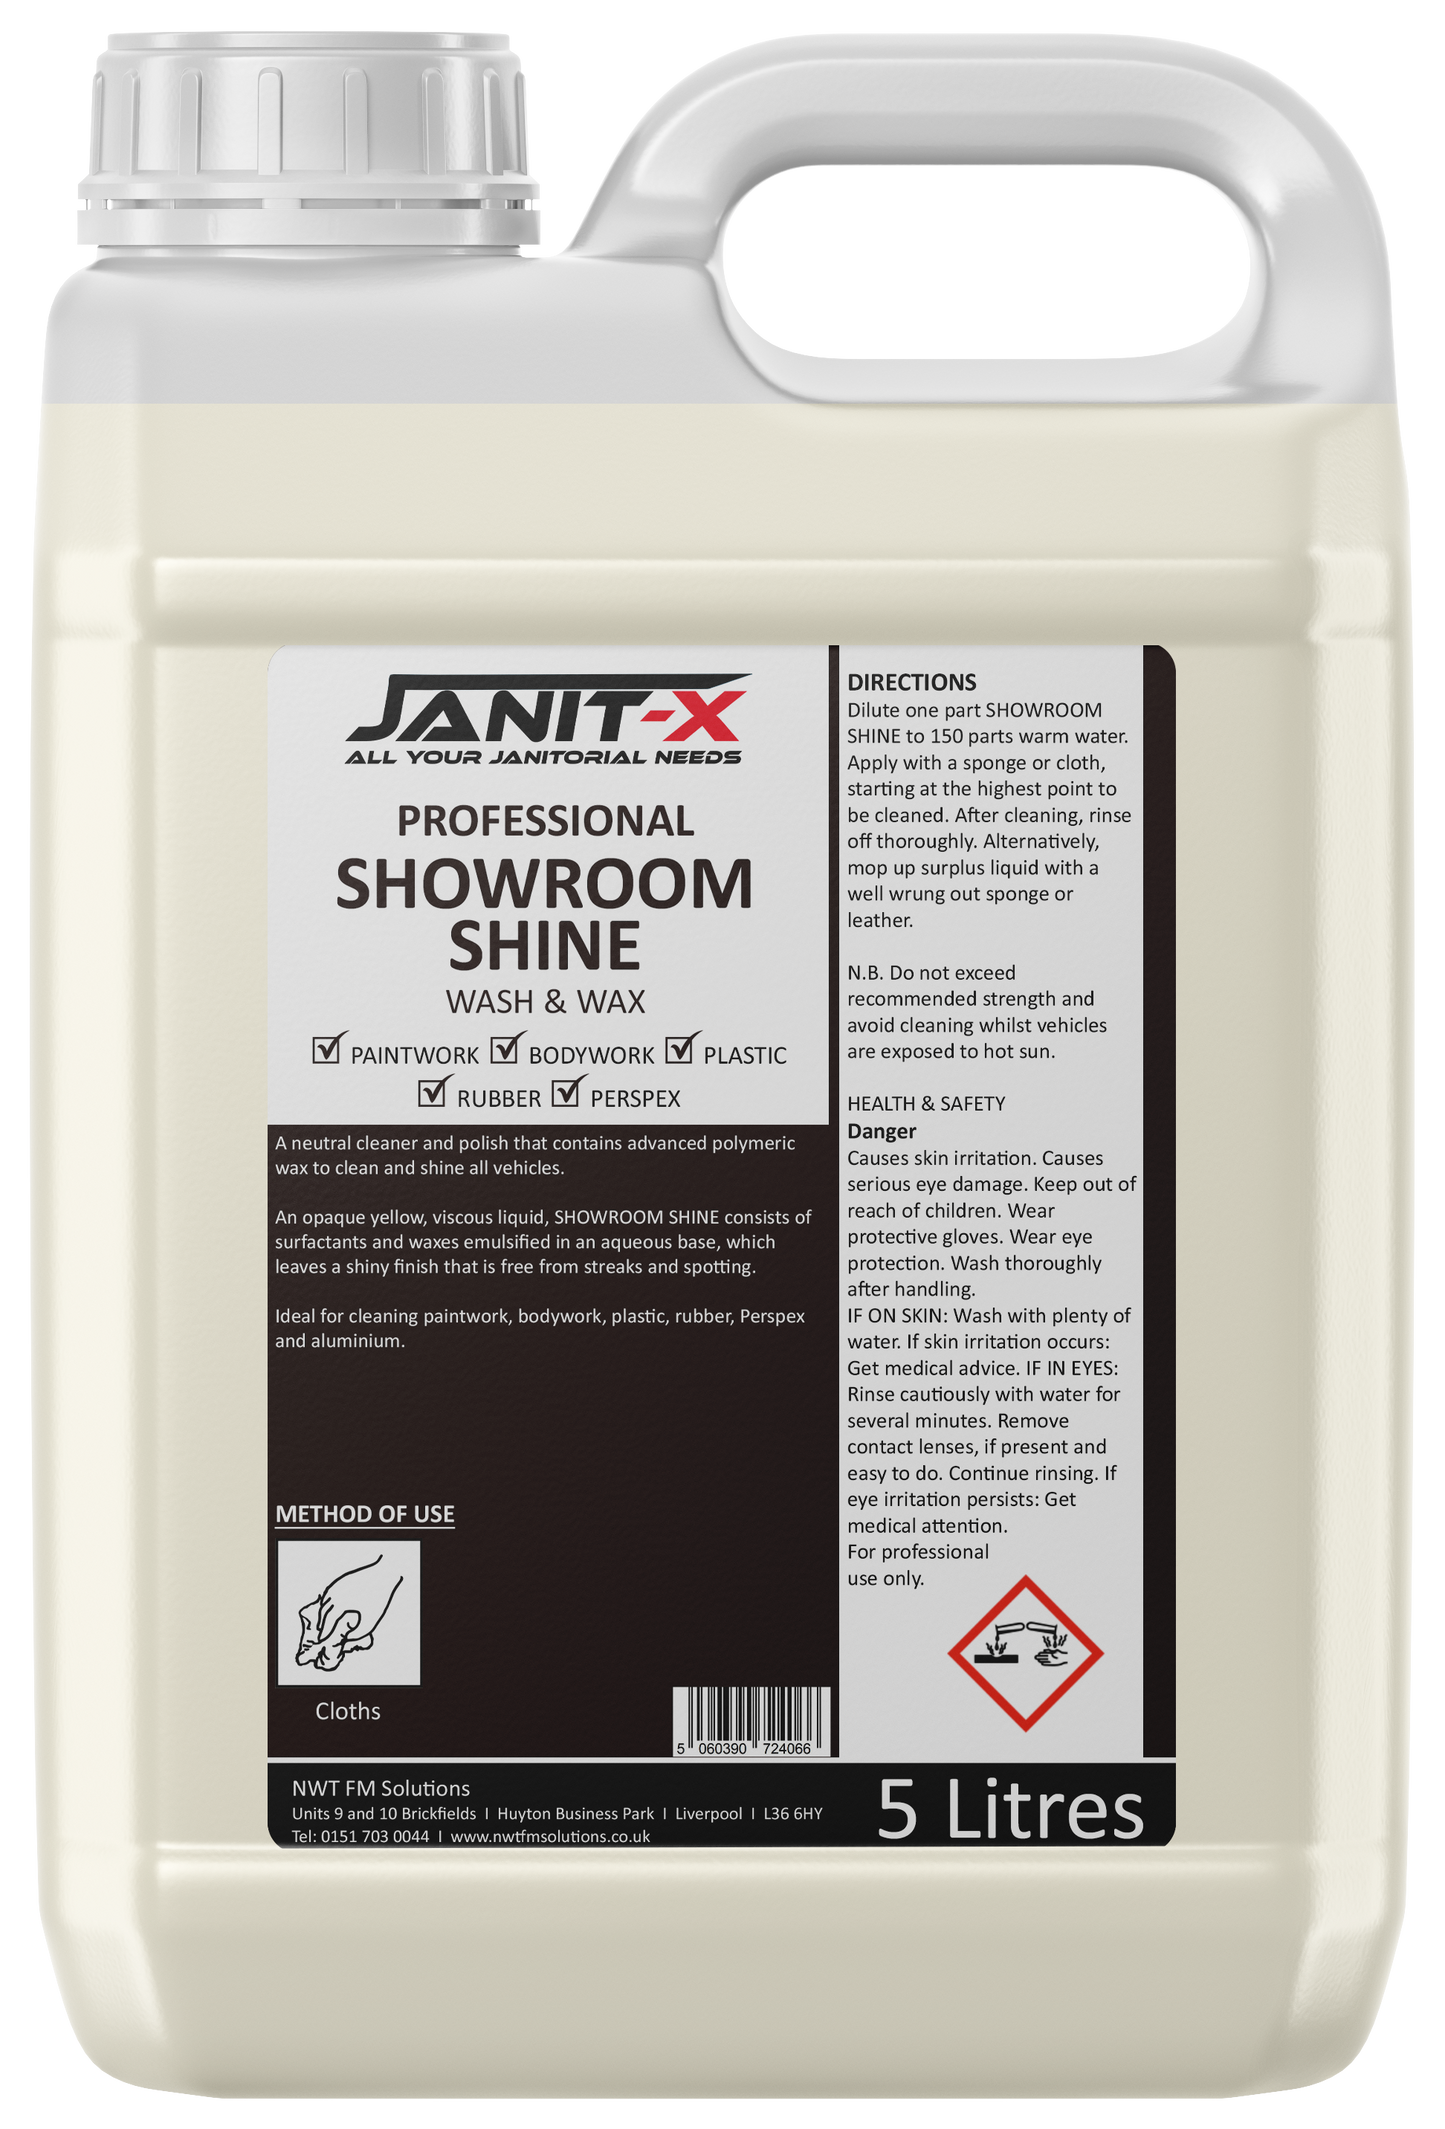 Janit-X Car Shampoo & Wax Showroom Shine 5 Litre